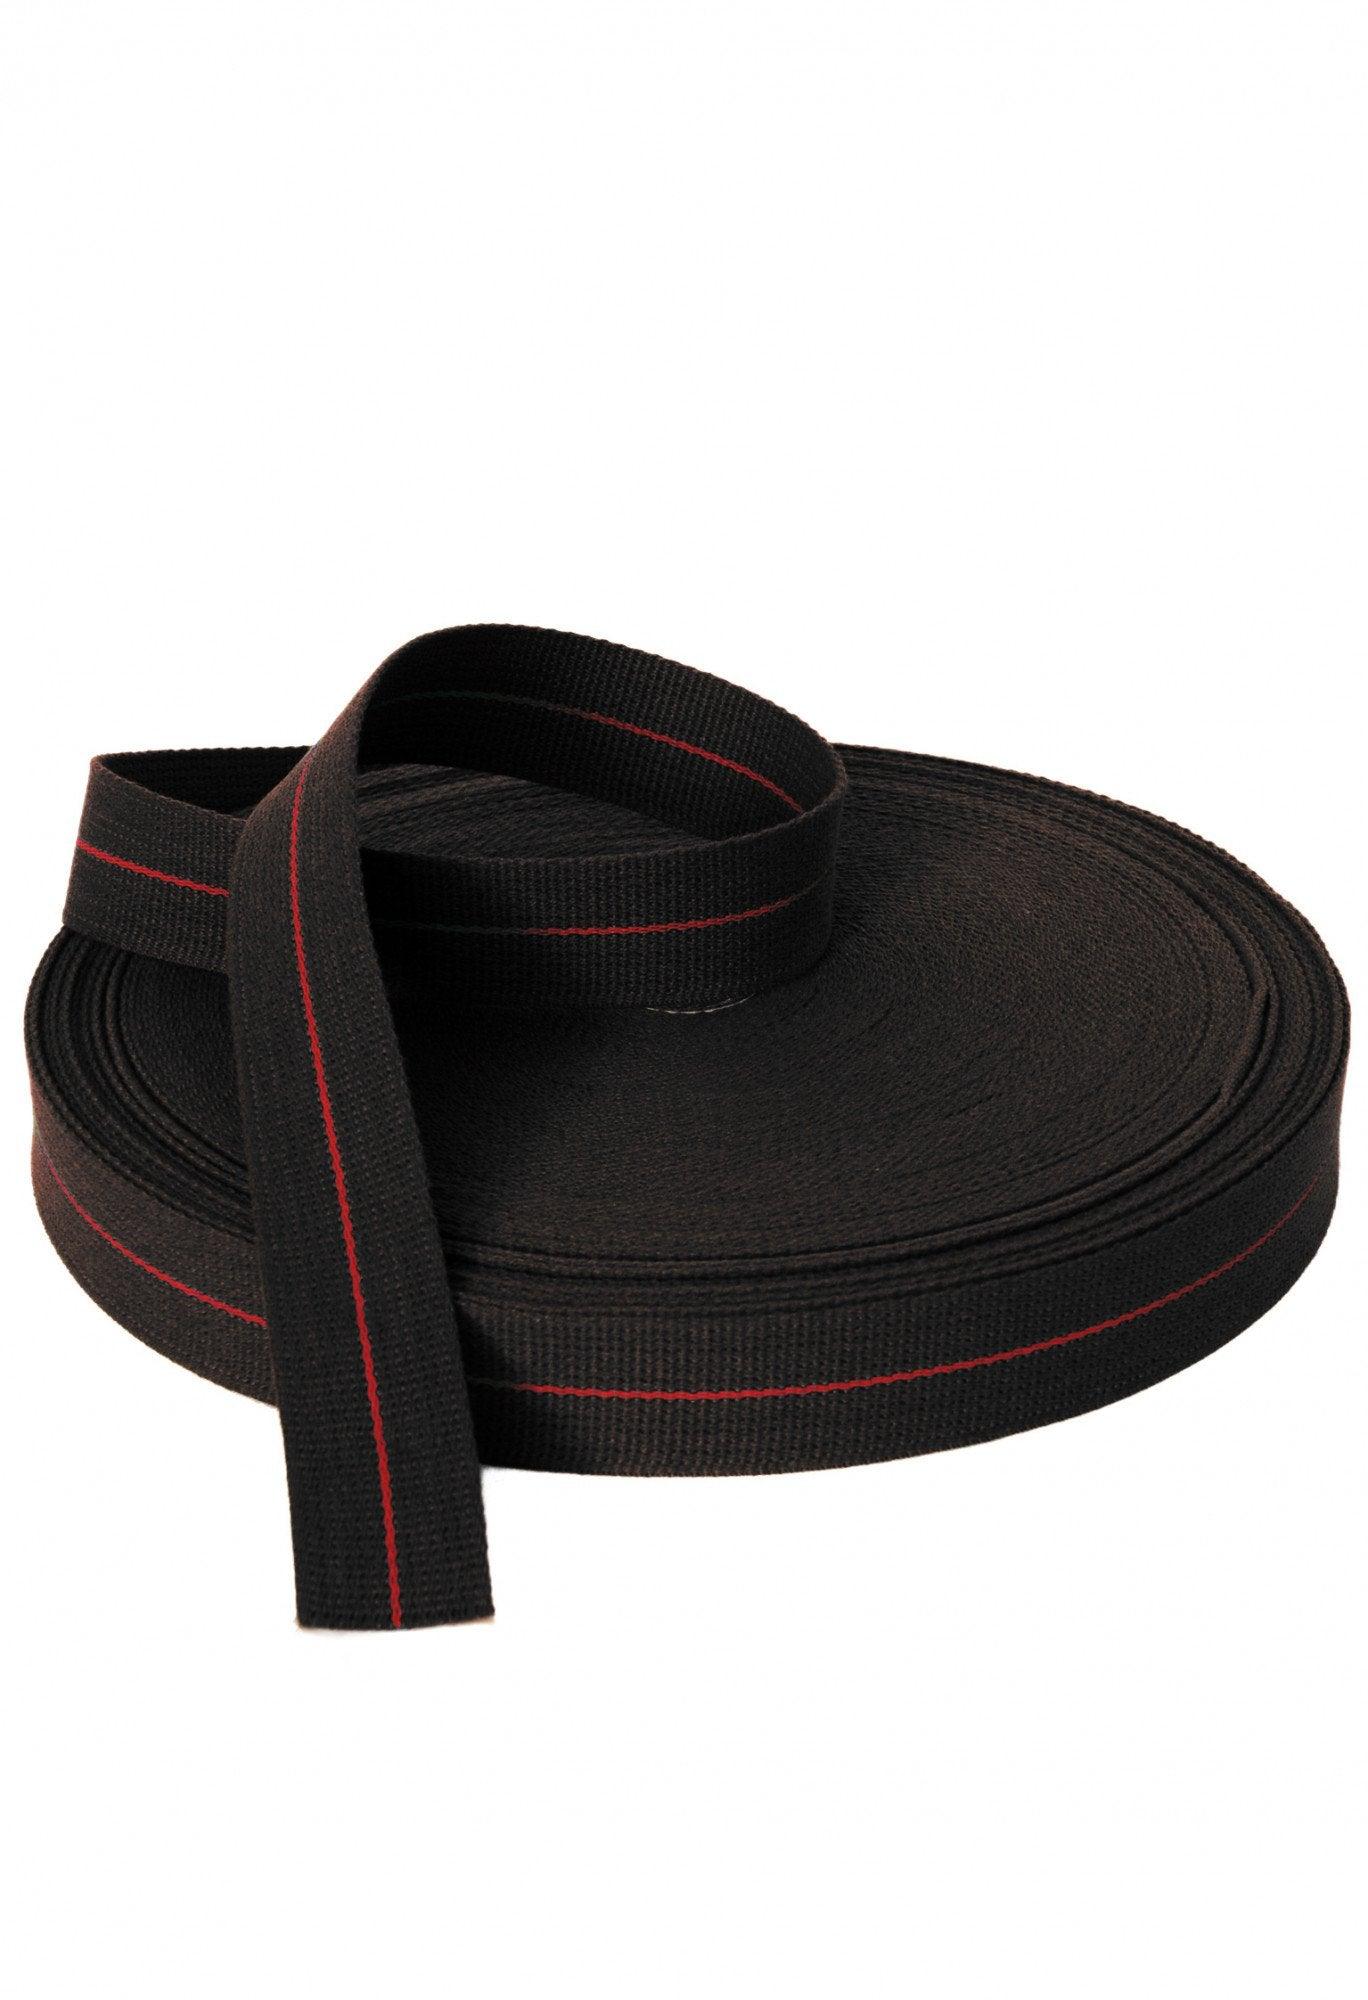 Rouleau de ceinture Karate Noir